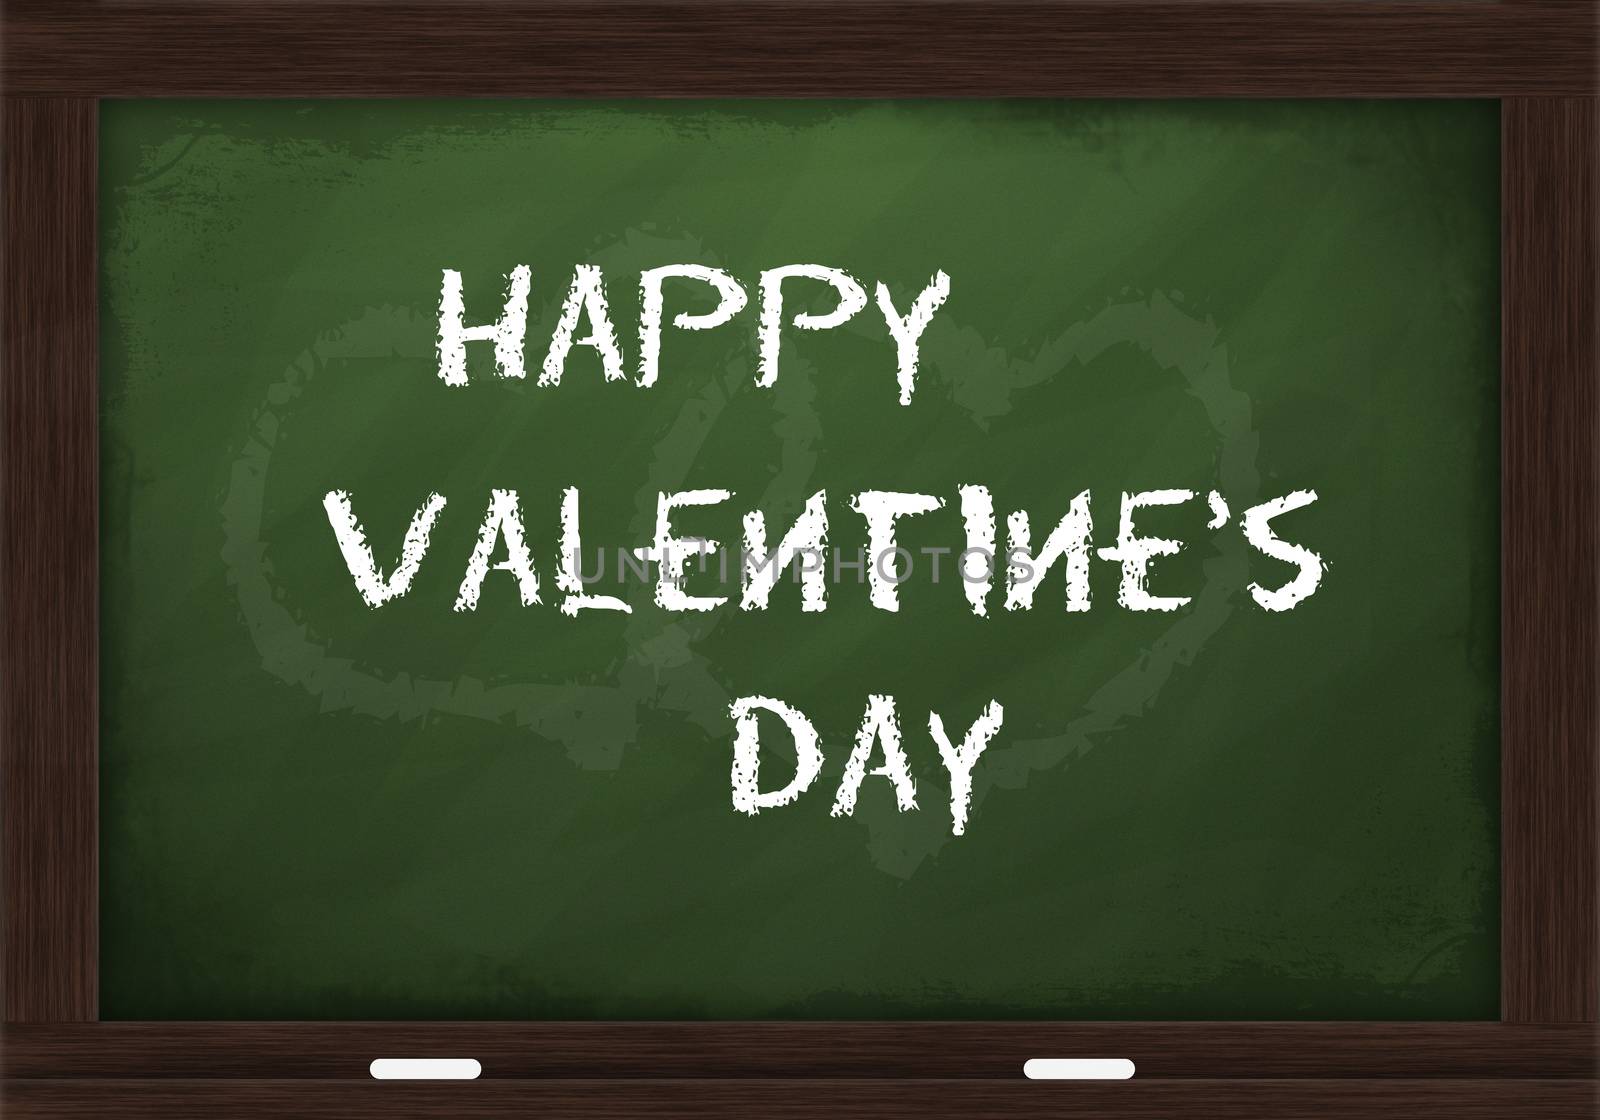 Happy Valentine's day on chalkboard